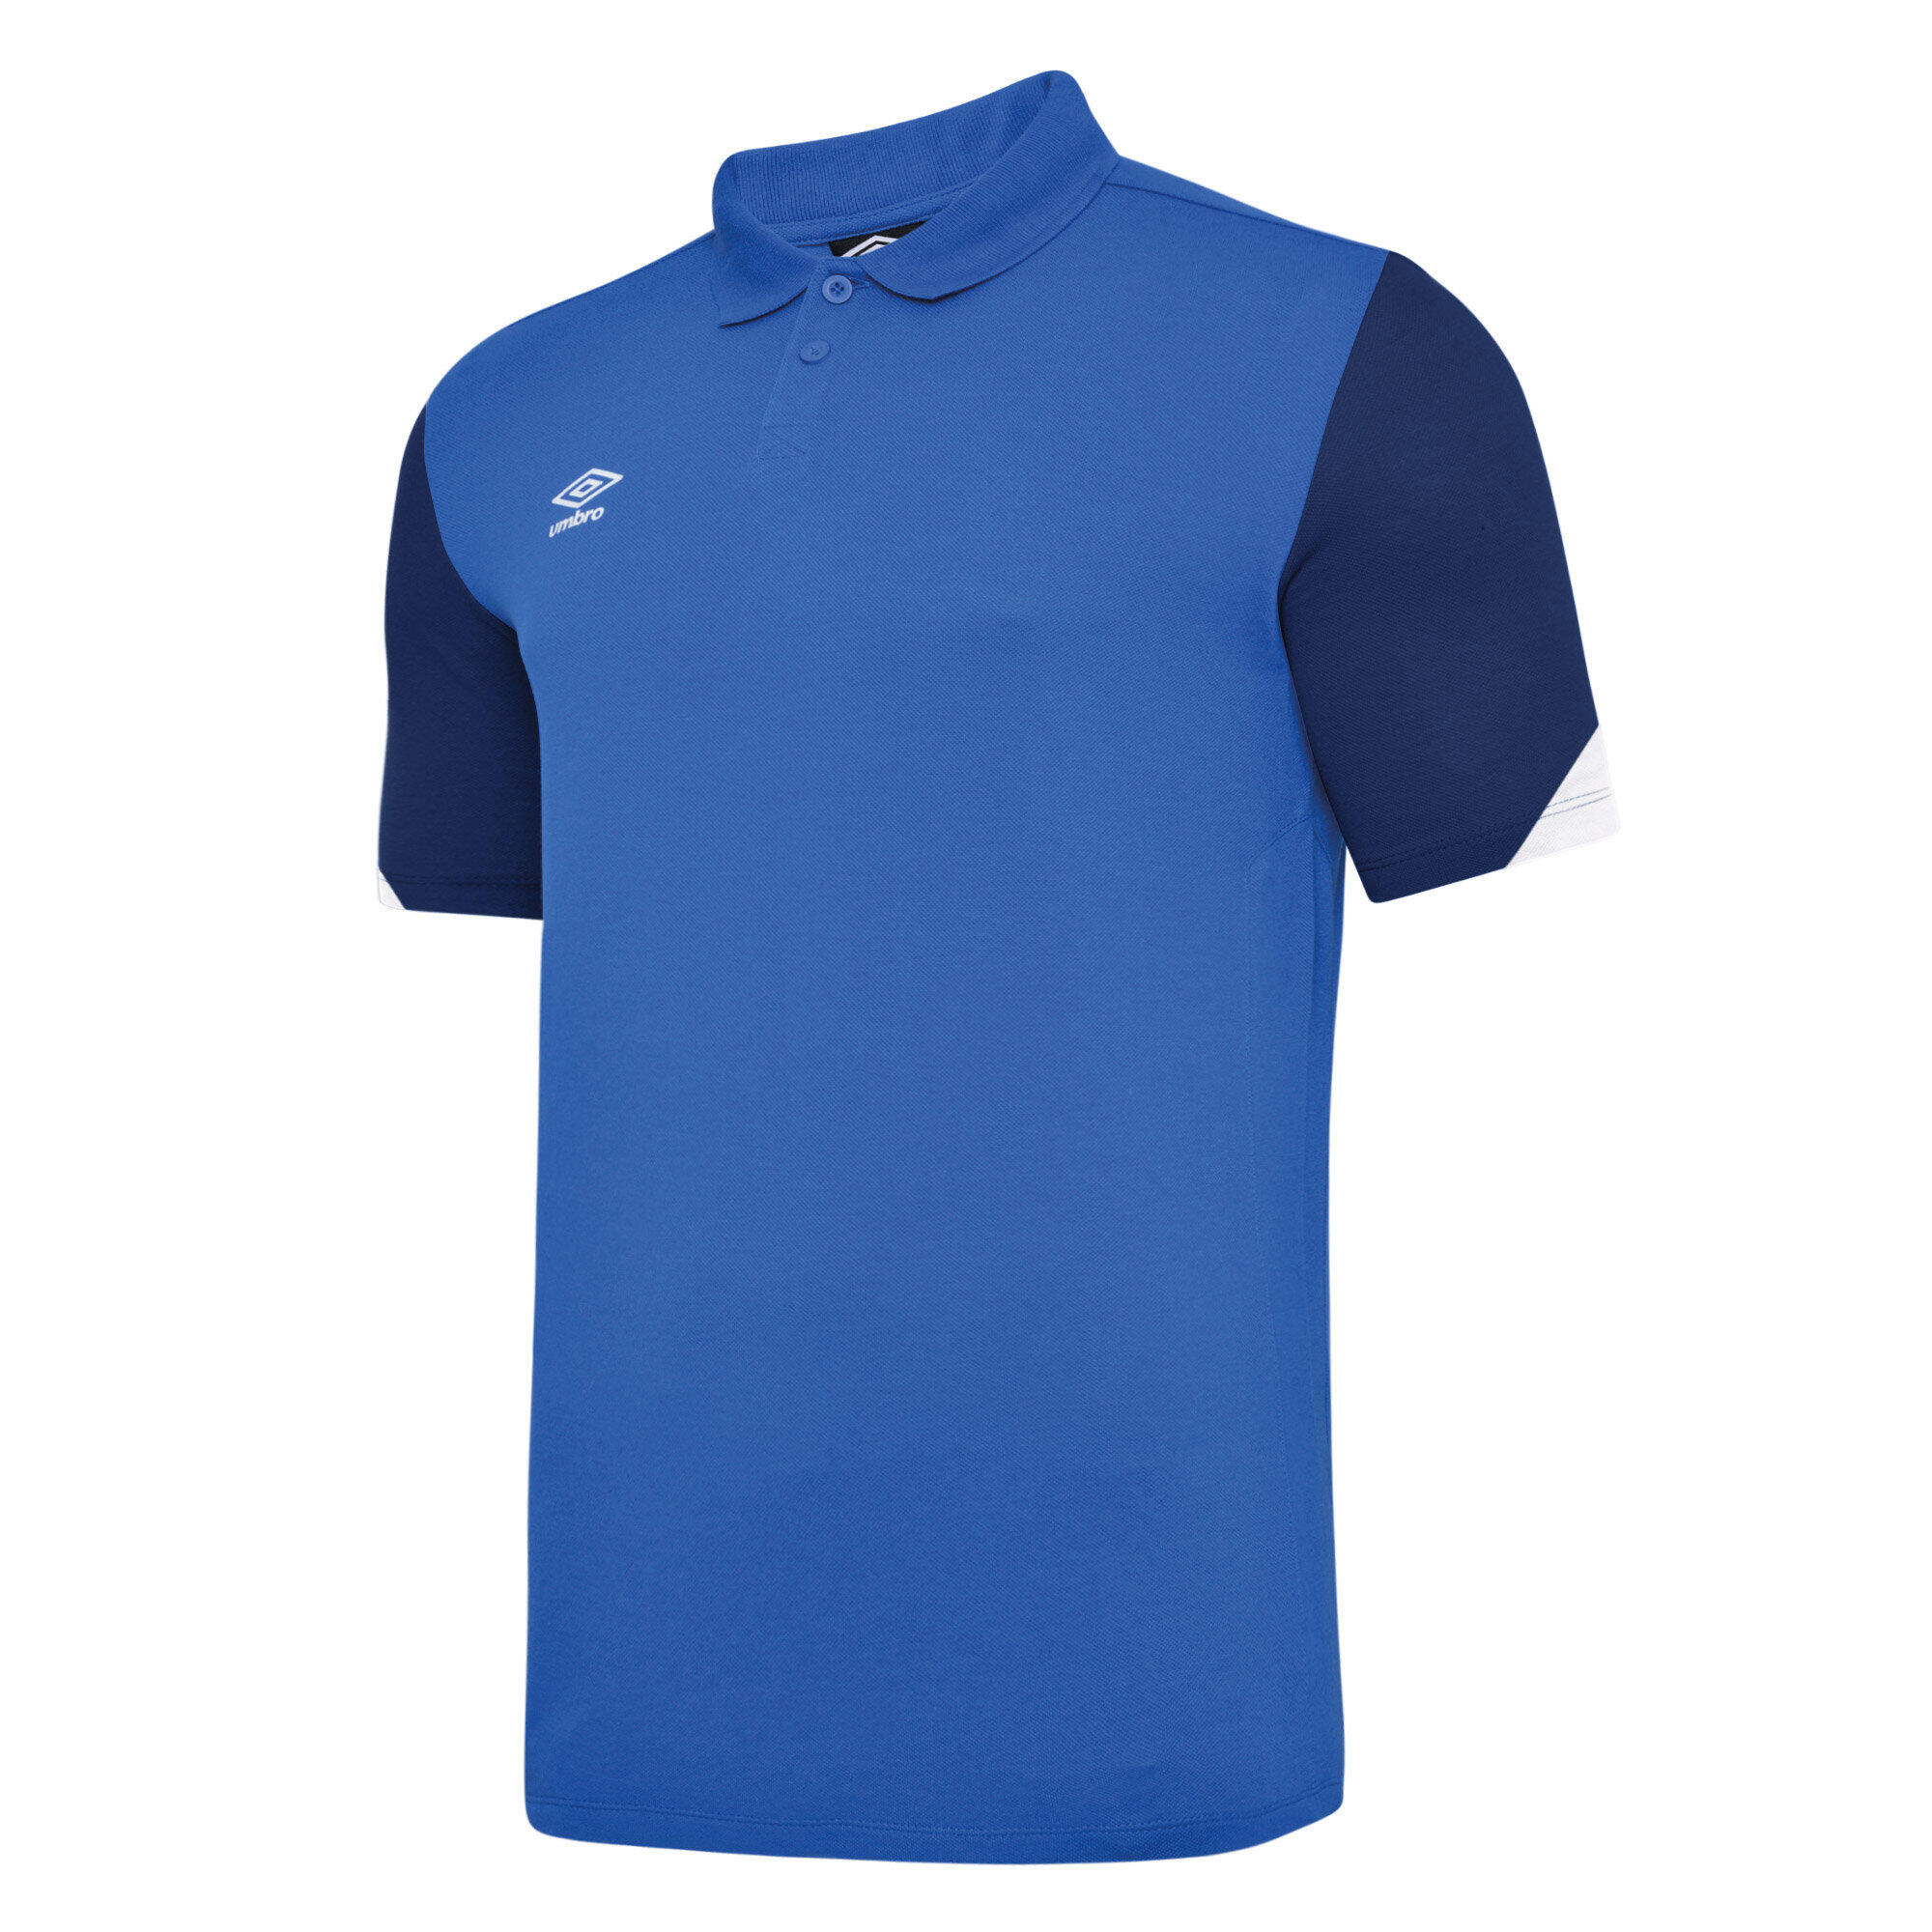 UMBRO Mens Total Training Polo Shirt (Royal Blue/Dark Navy/White)